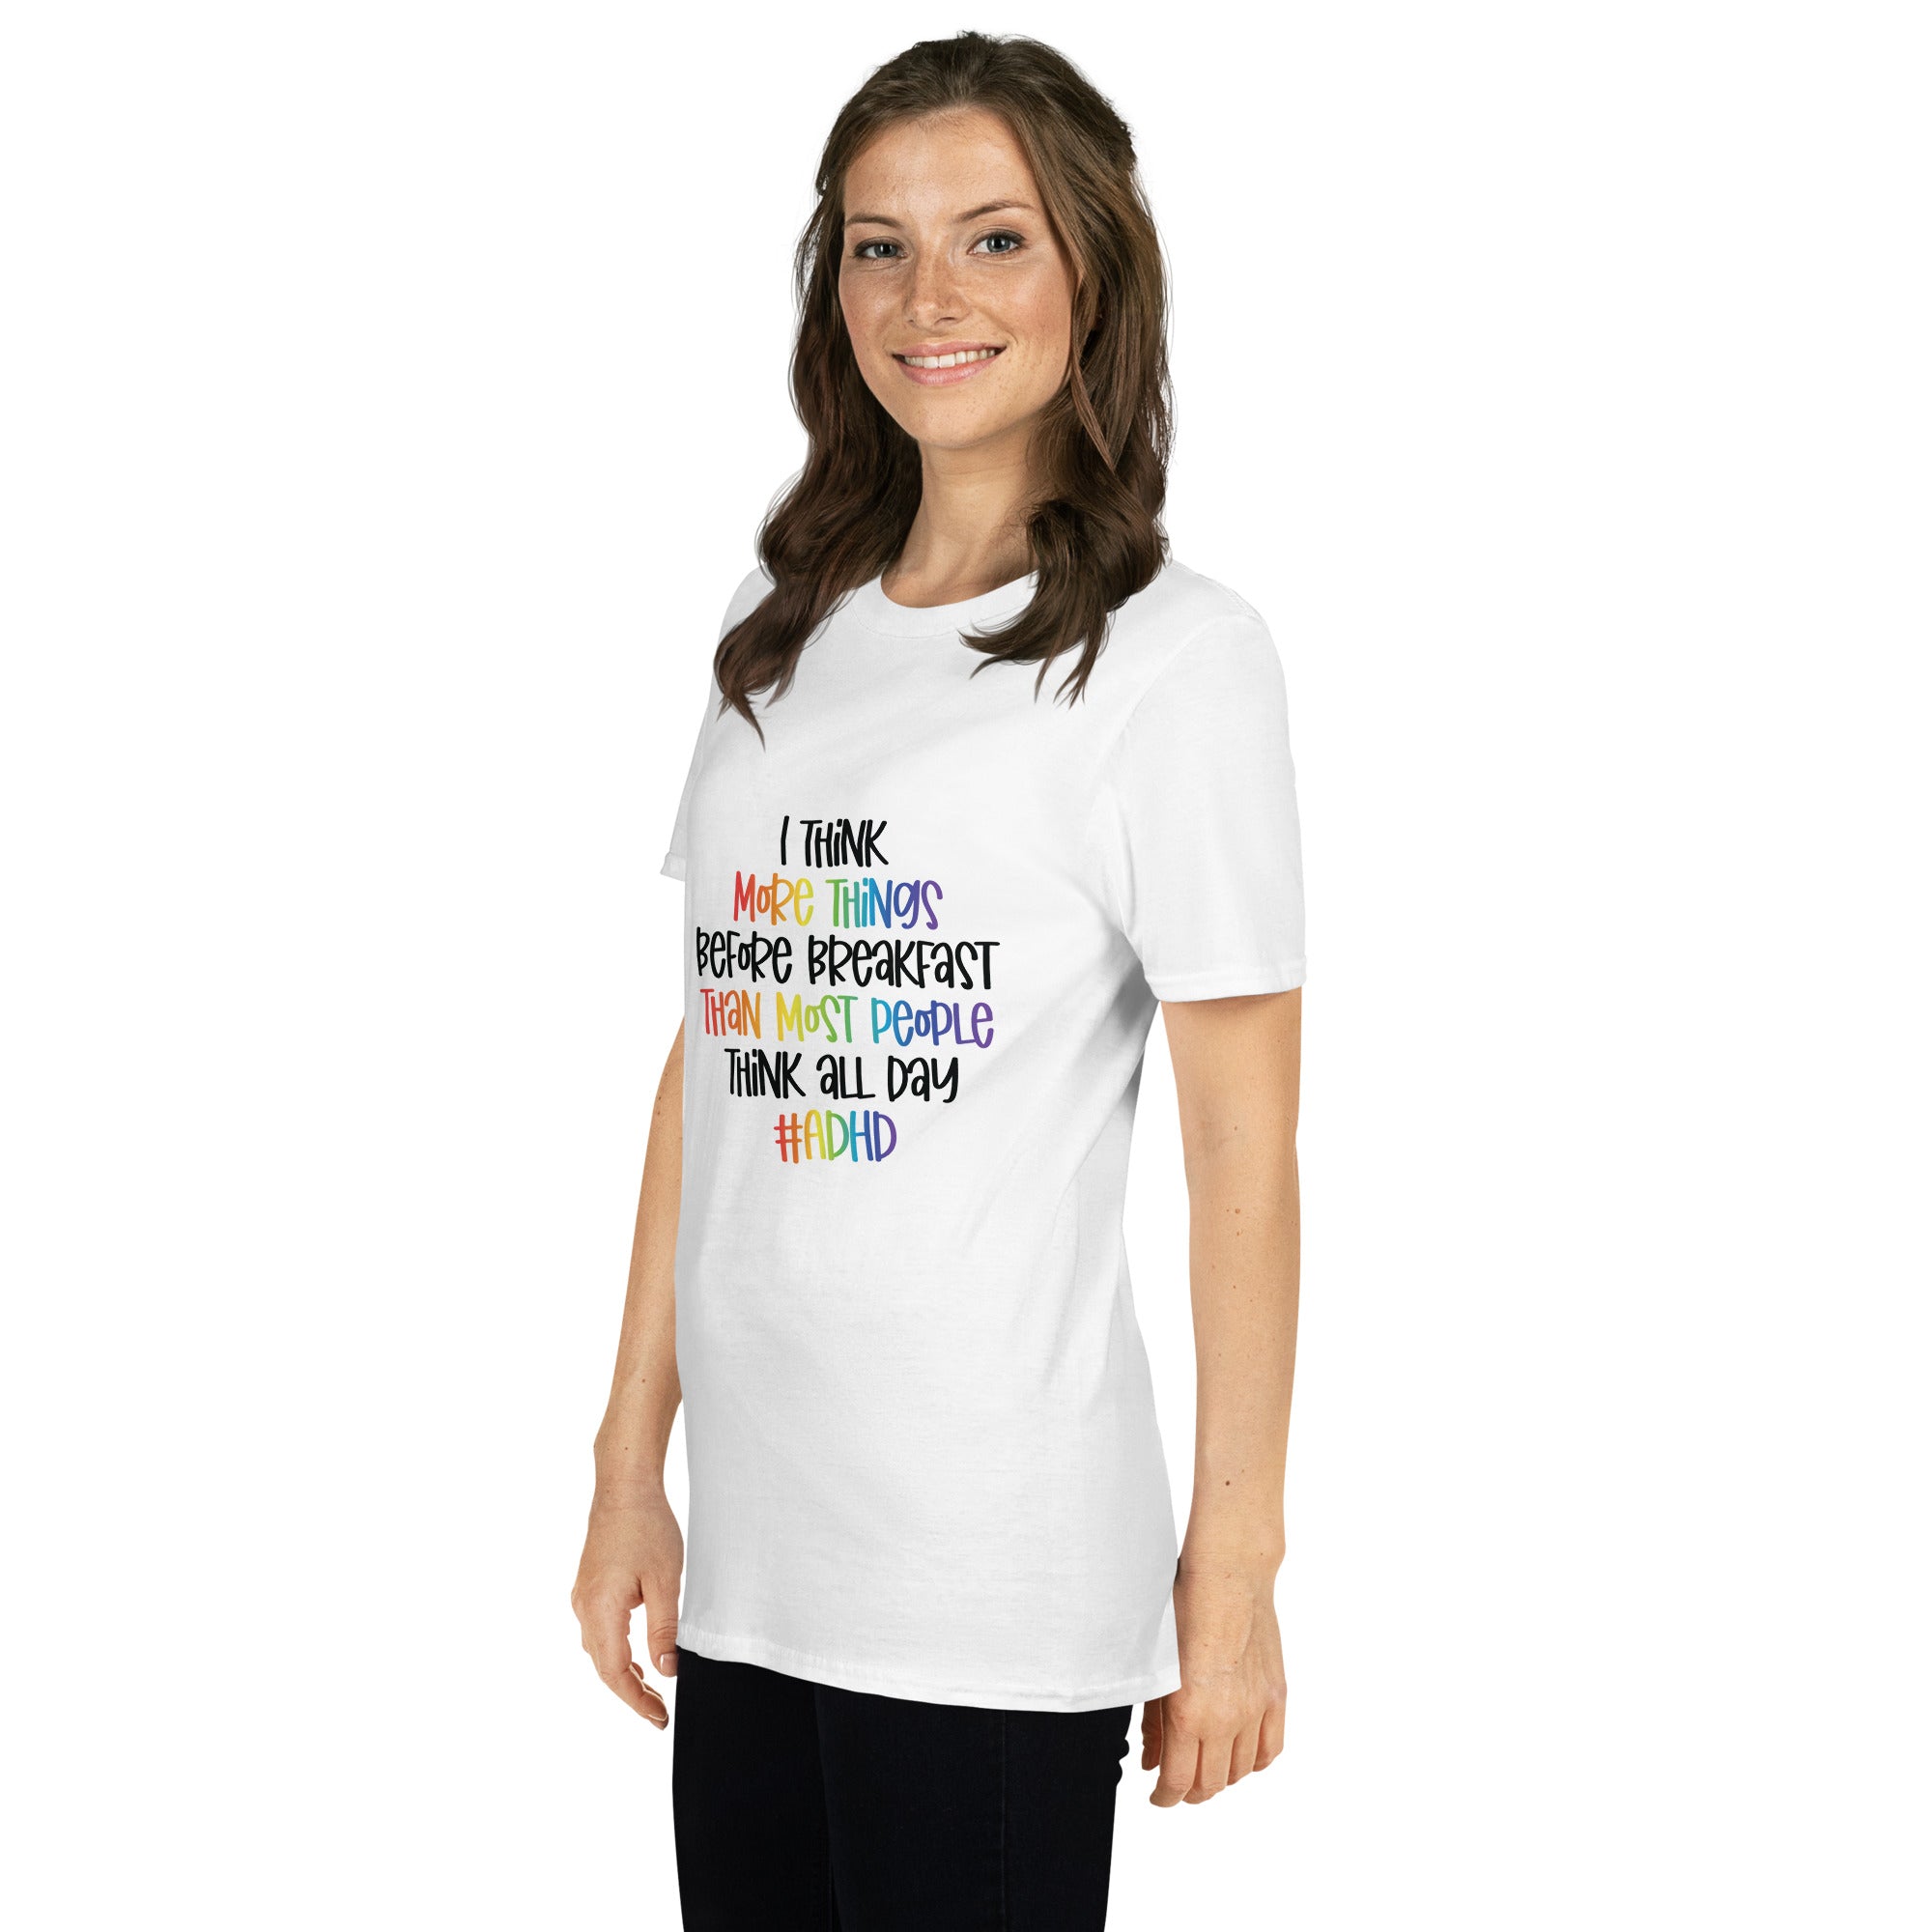 Short-Sleeve Unisex T-Shirt- ADHD- I Think More Things